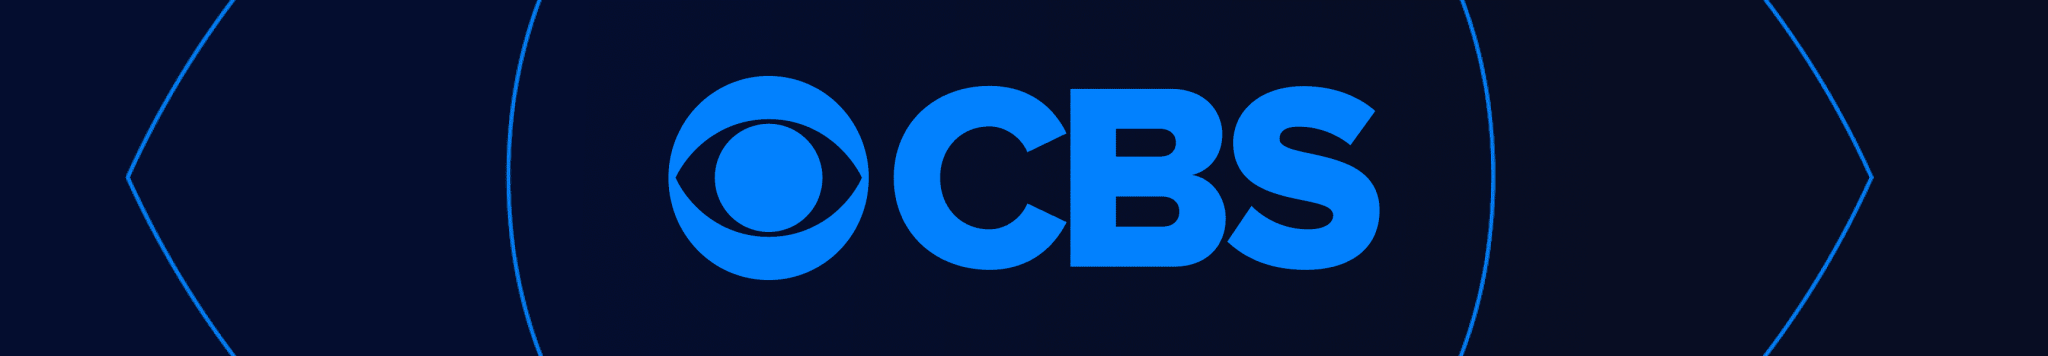 CBS Entertainment Pet Products